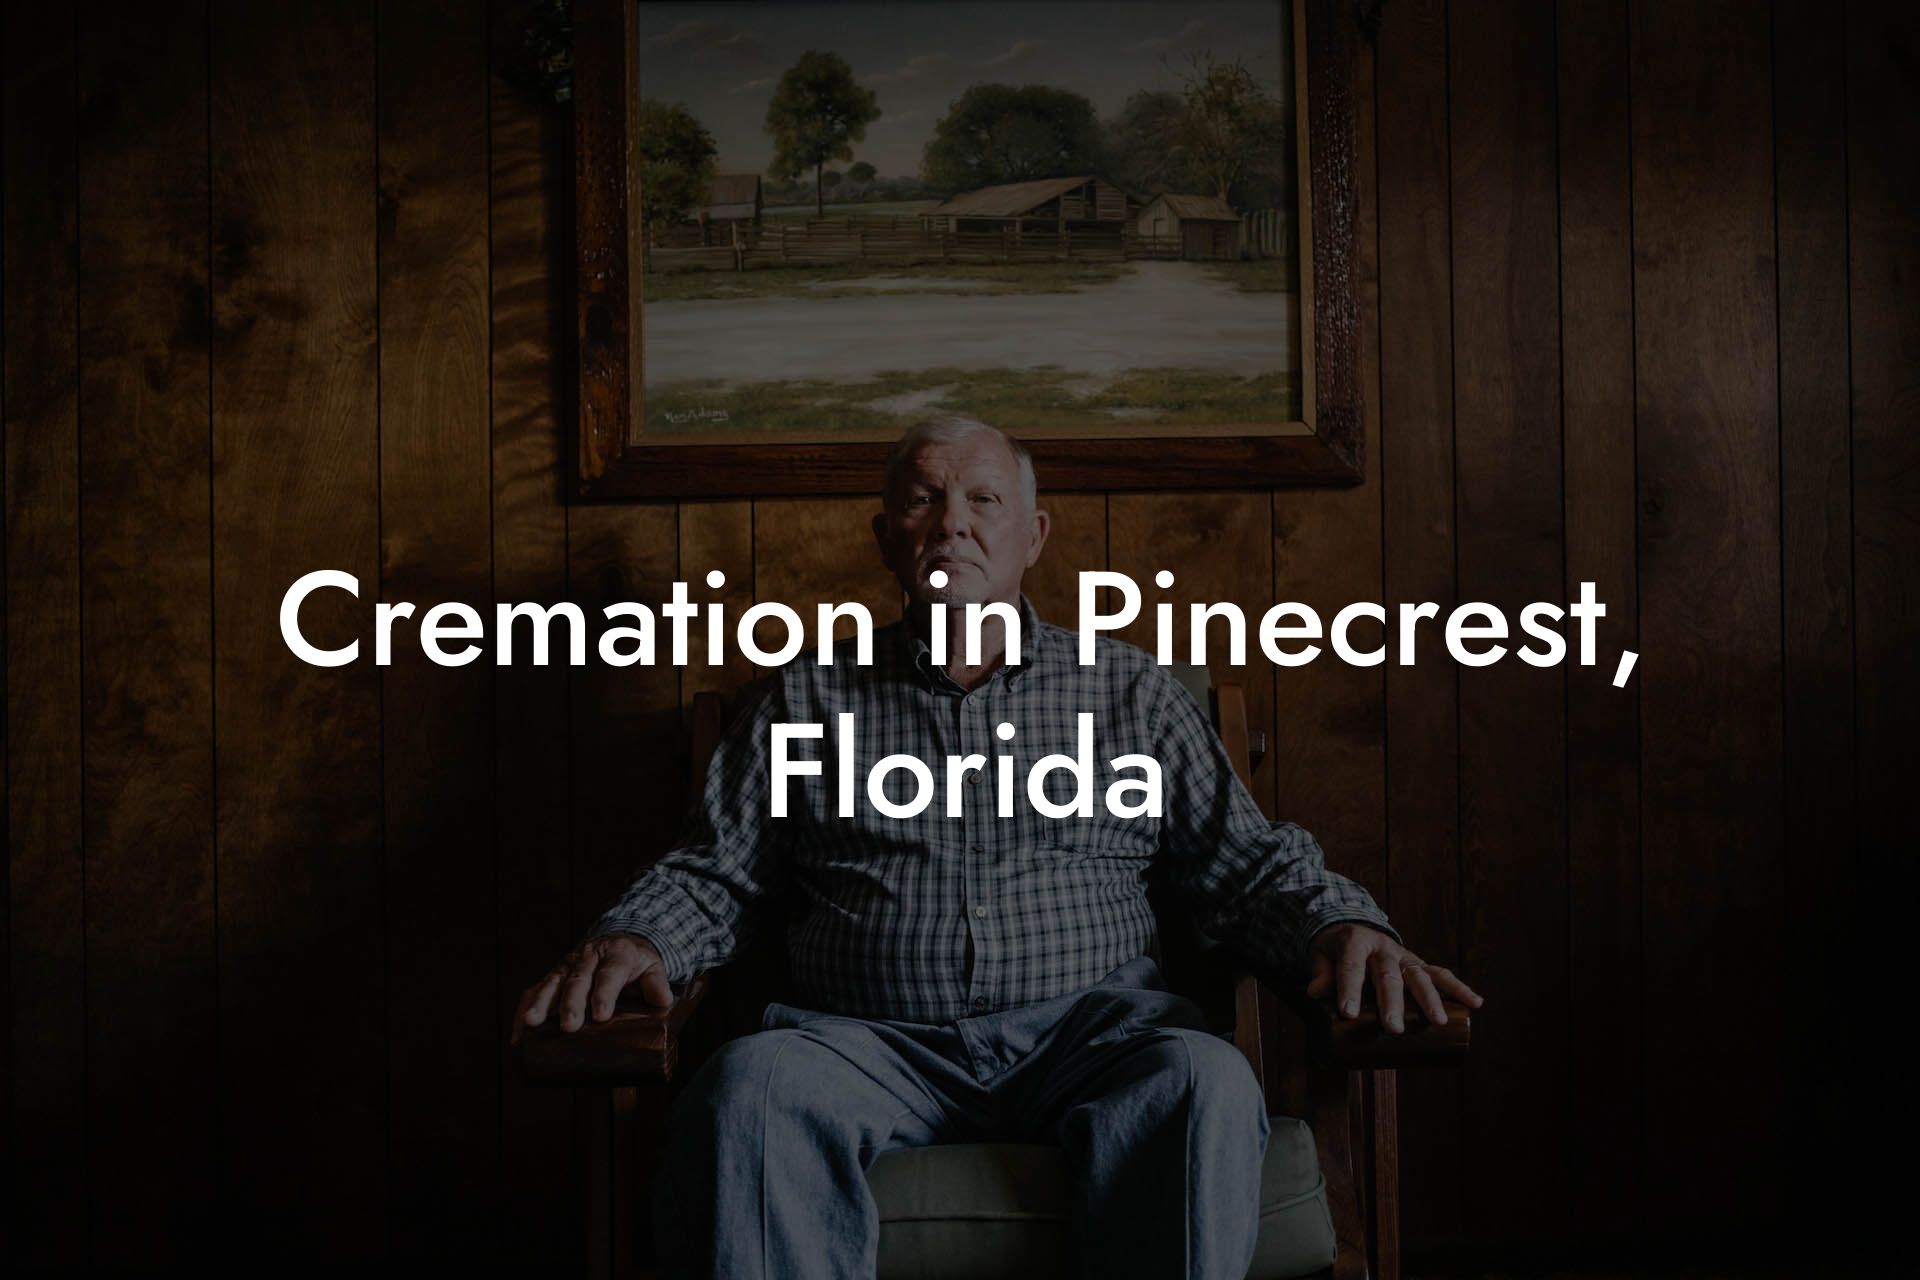 Cremation in Pinecrest, Florida